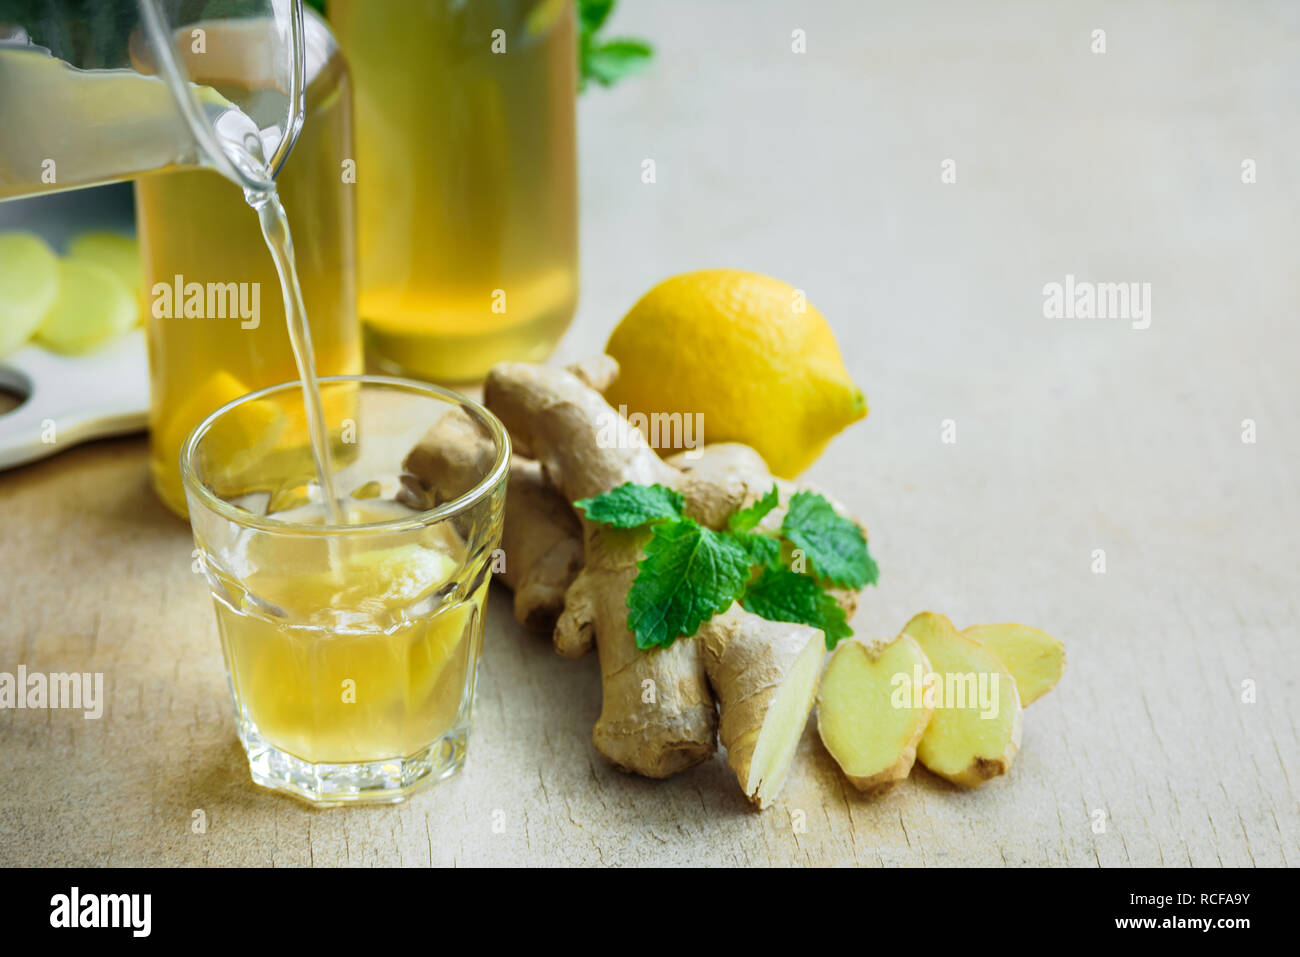 Bottle of detox ginger water on wooden background. Ingredients ginger, lemon, mint. Dieting concept. Stock Photo